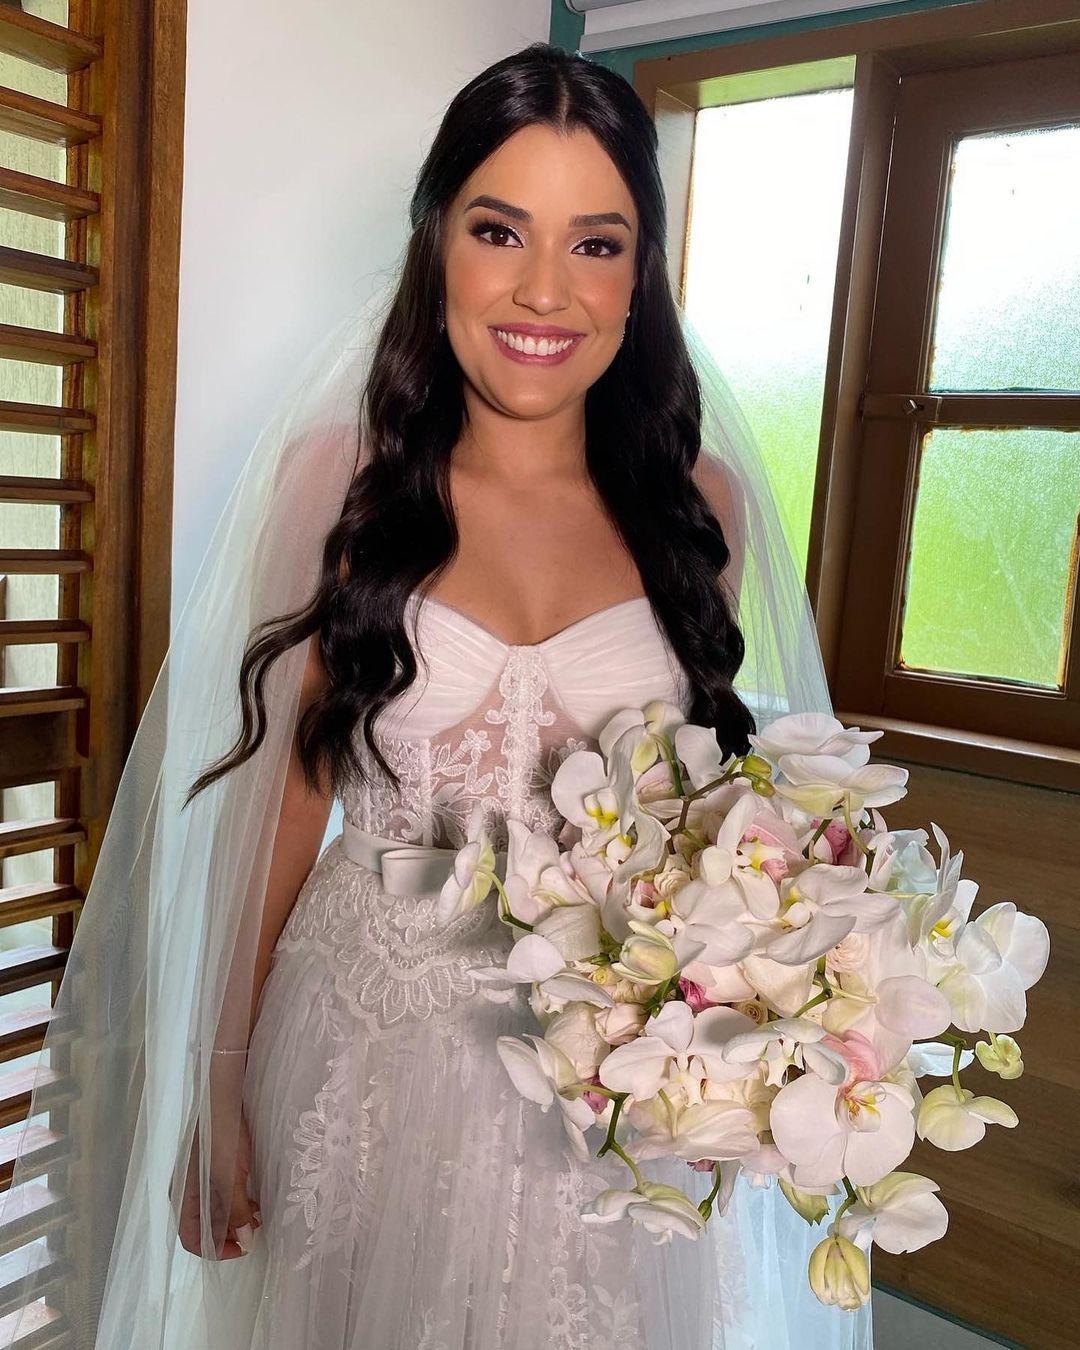 class="content__text"
 Noiva Fernanda 🤍
Veio de Brasília para casar na #capeladosmilagres 
 